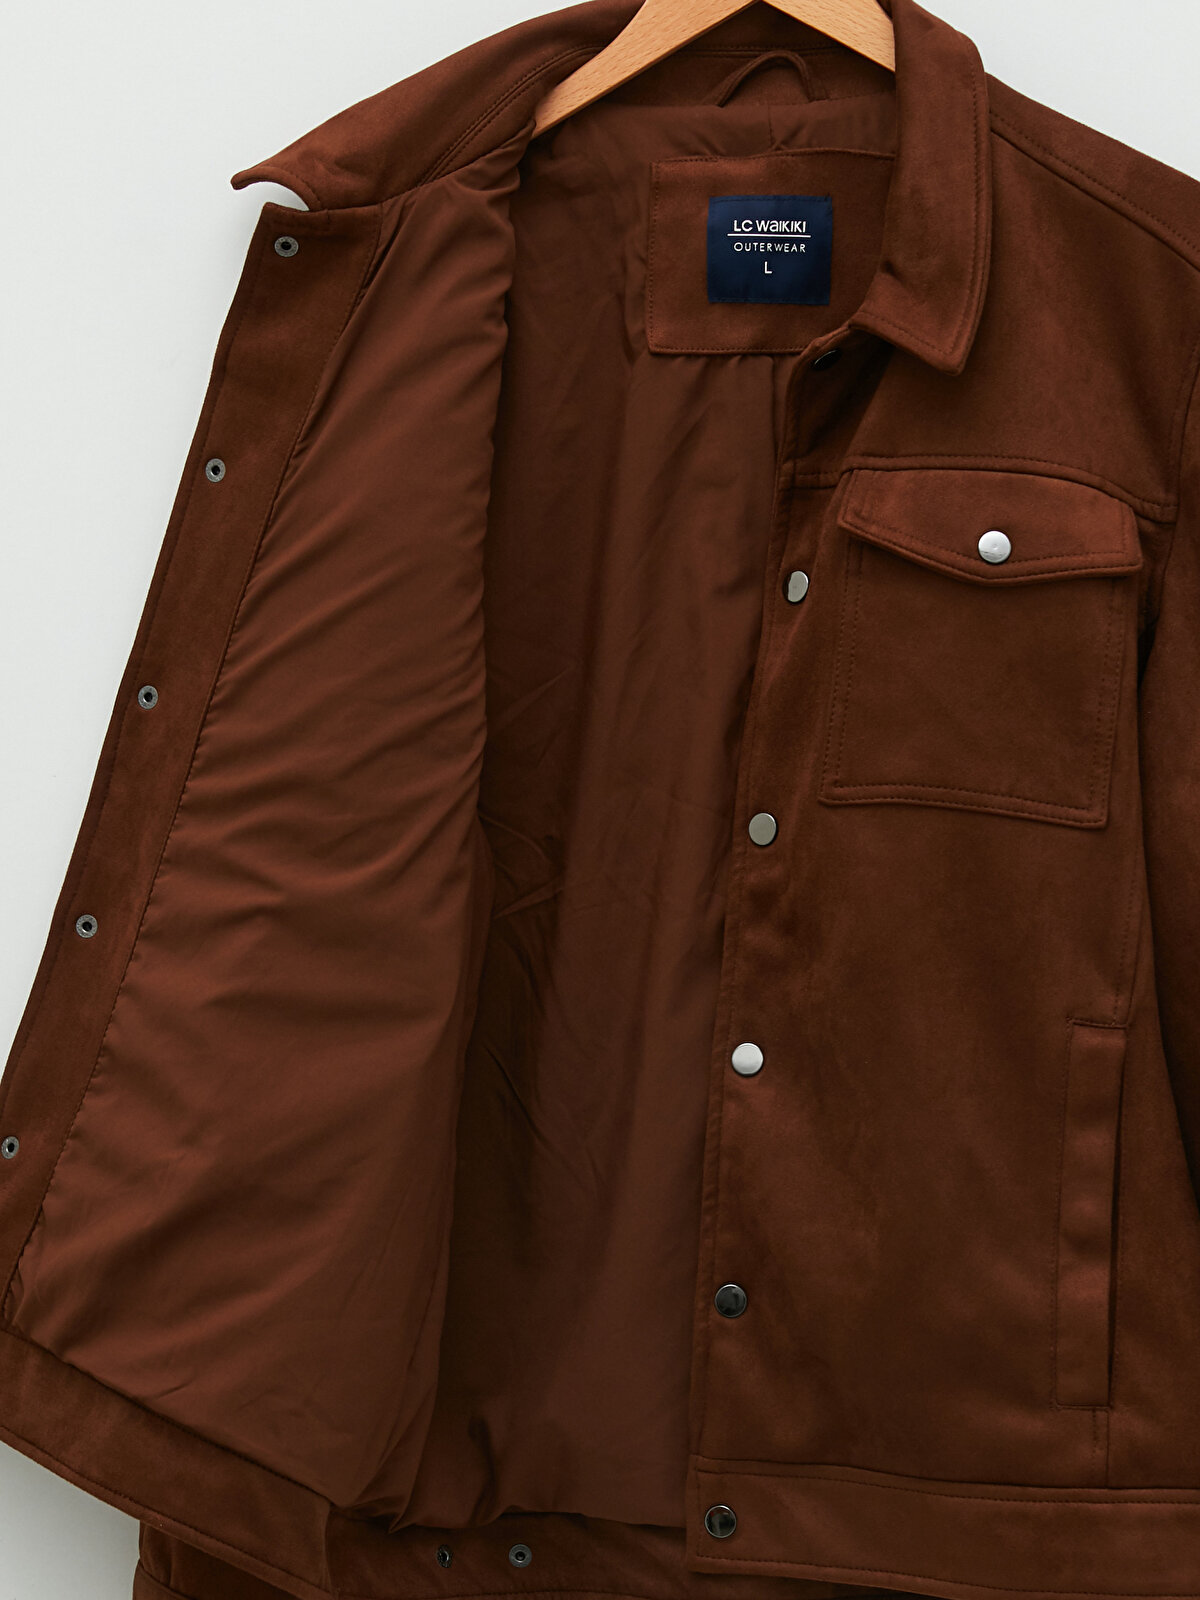 Standard Pattern Shirt Collar Men's Leather Look Coat -S22078Z8 